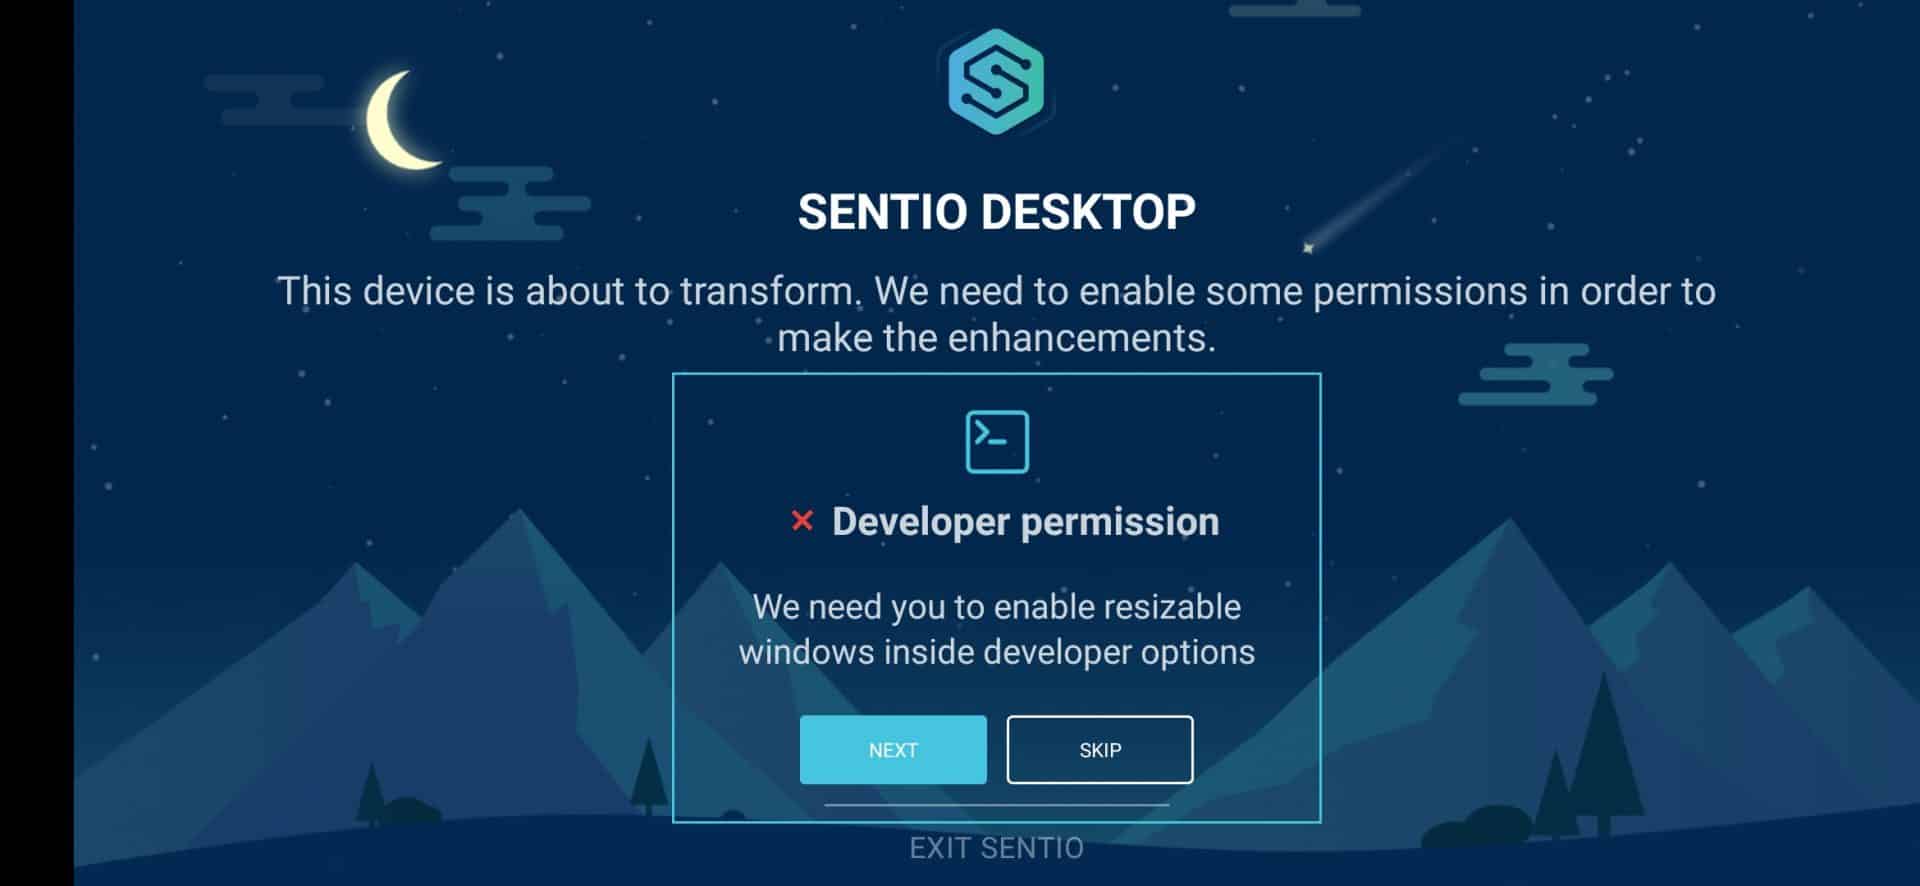 Using Sentio Desktop